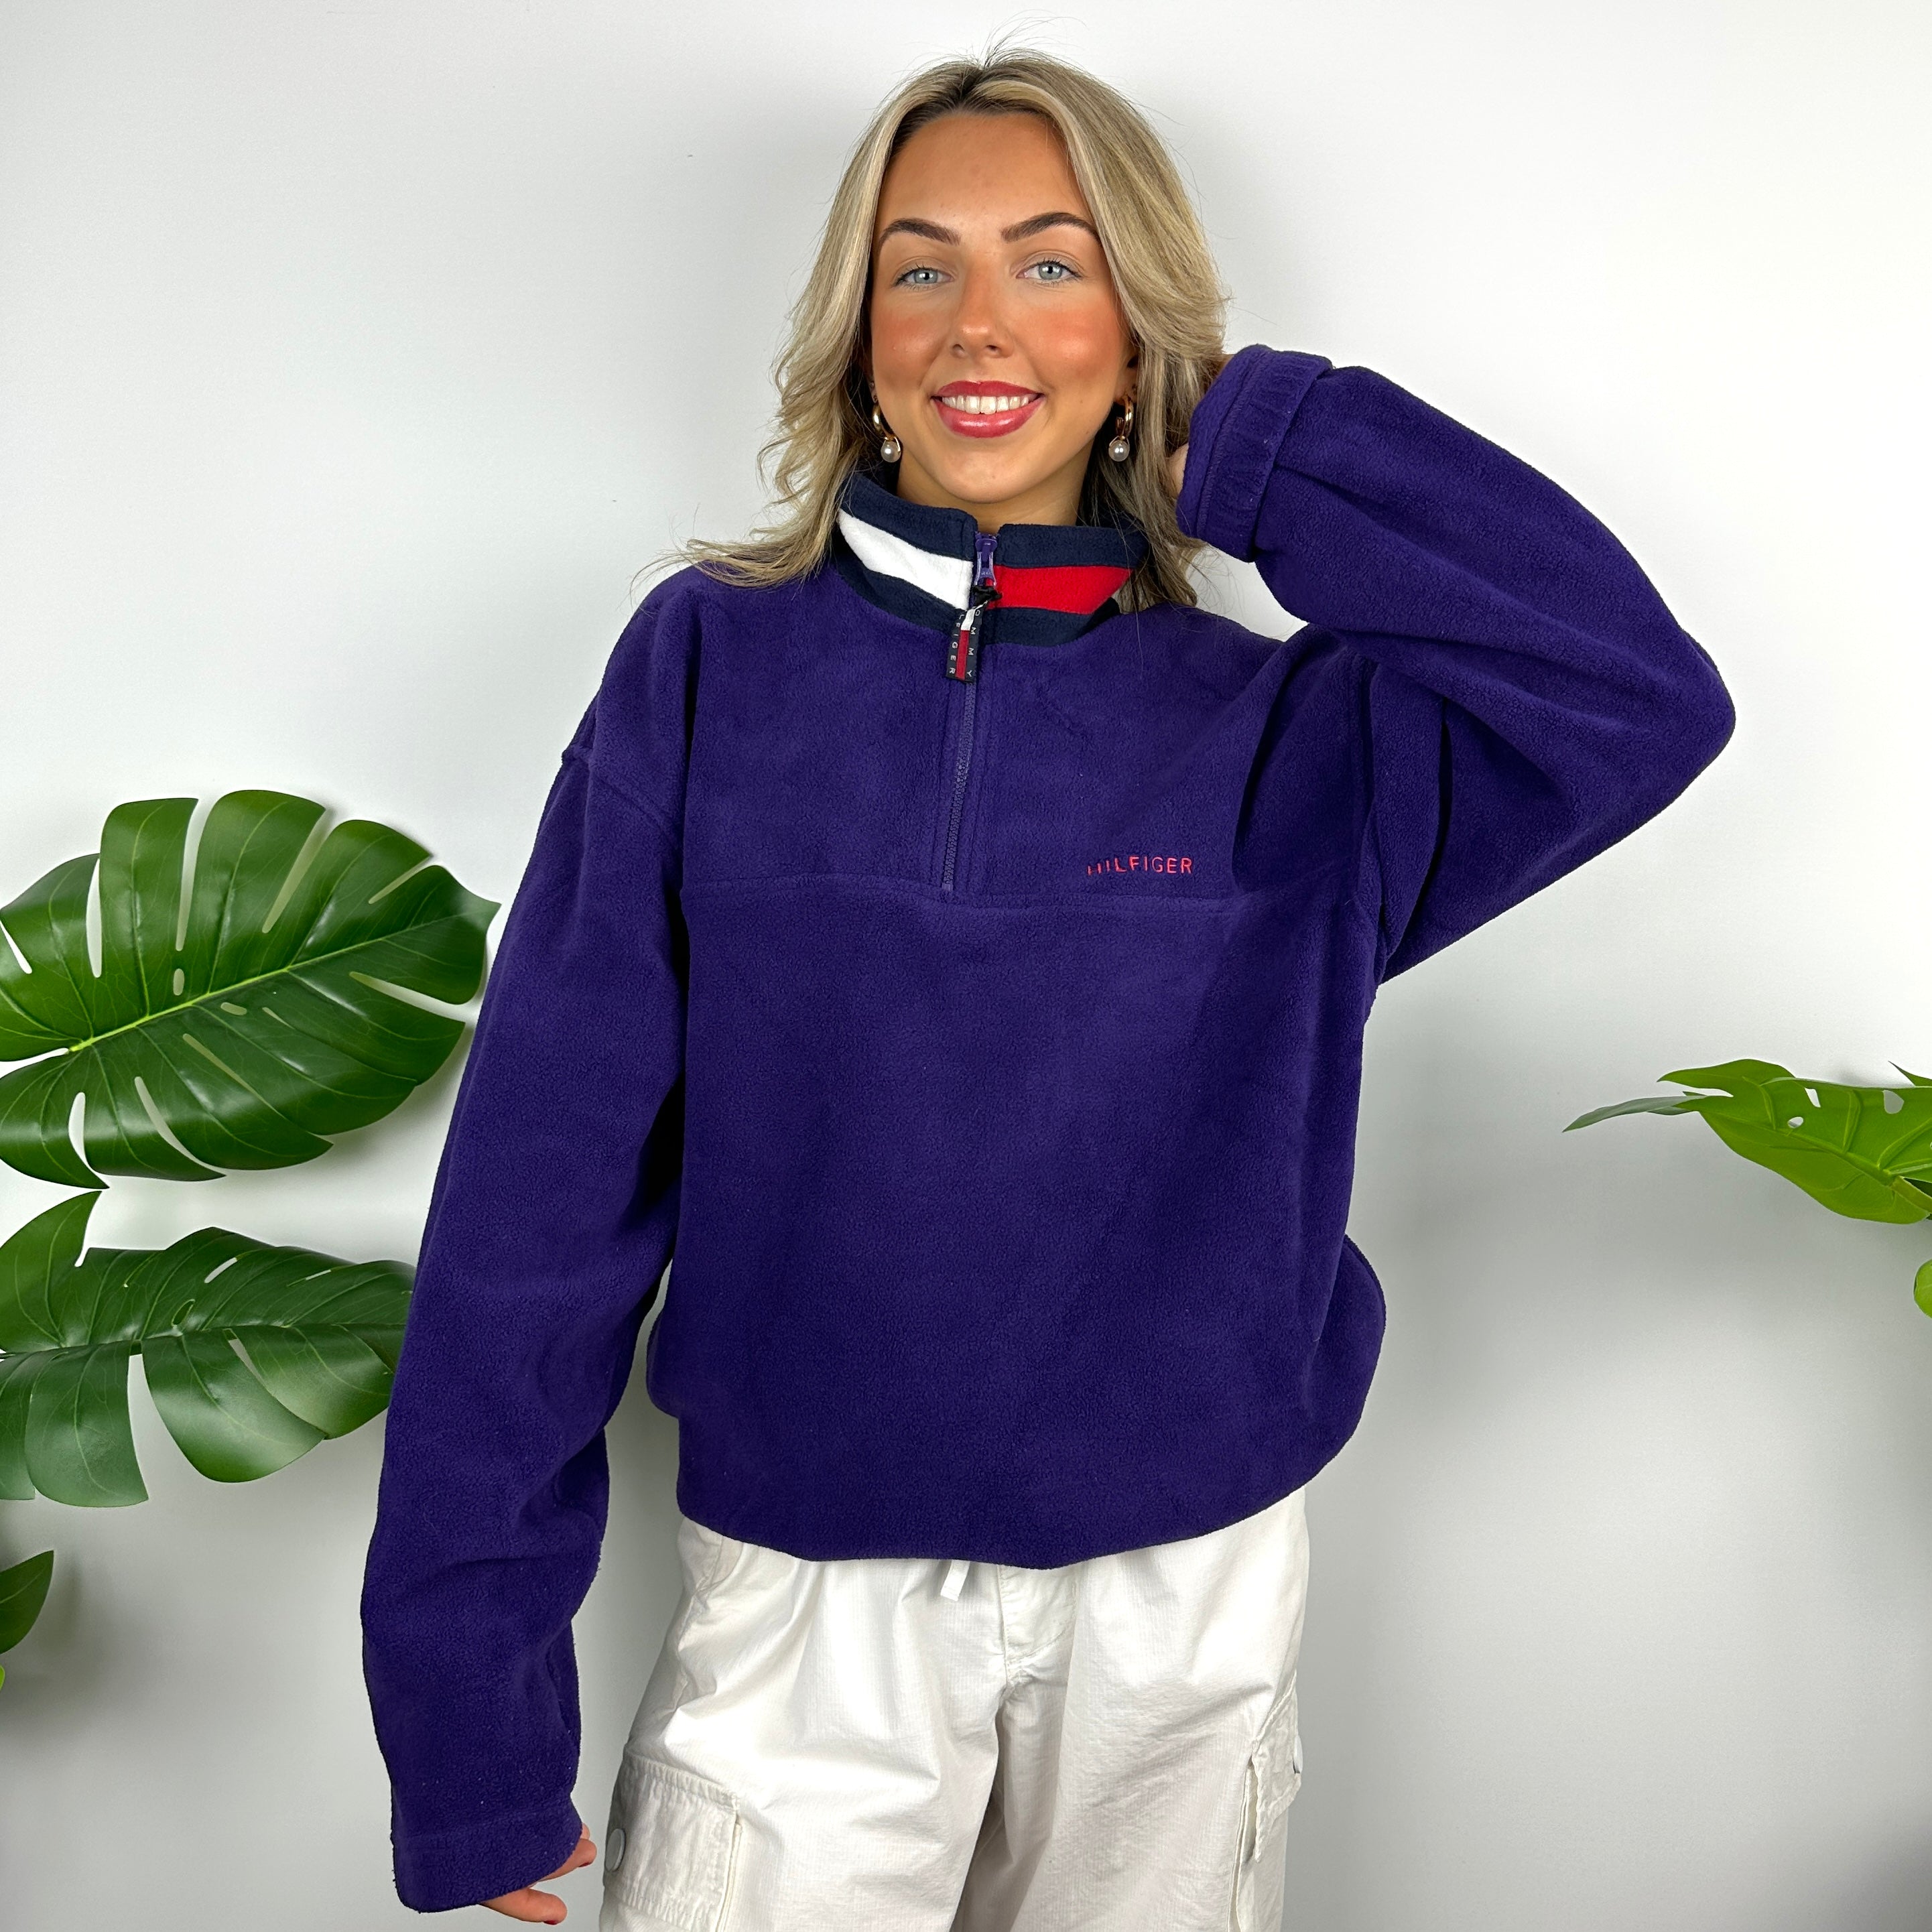 Tommy Hilfiger Purple Embroidered Spell Out Teddy Bear Fleece Quarter Zip Sweatshirt (L)